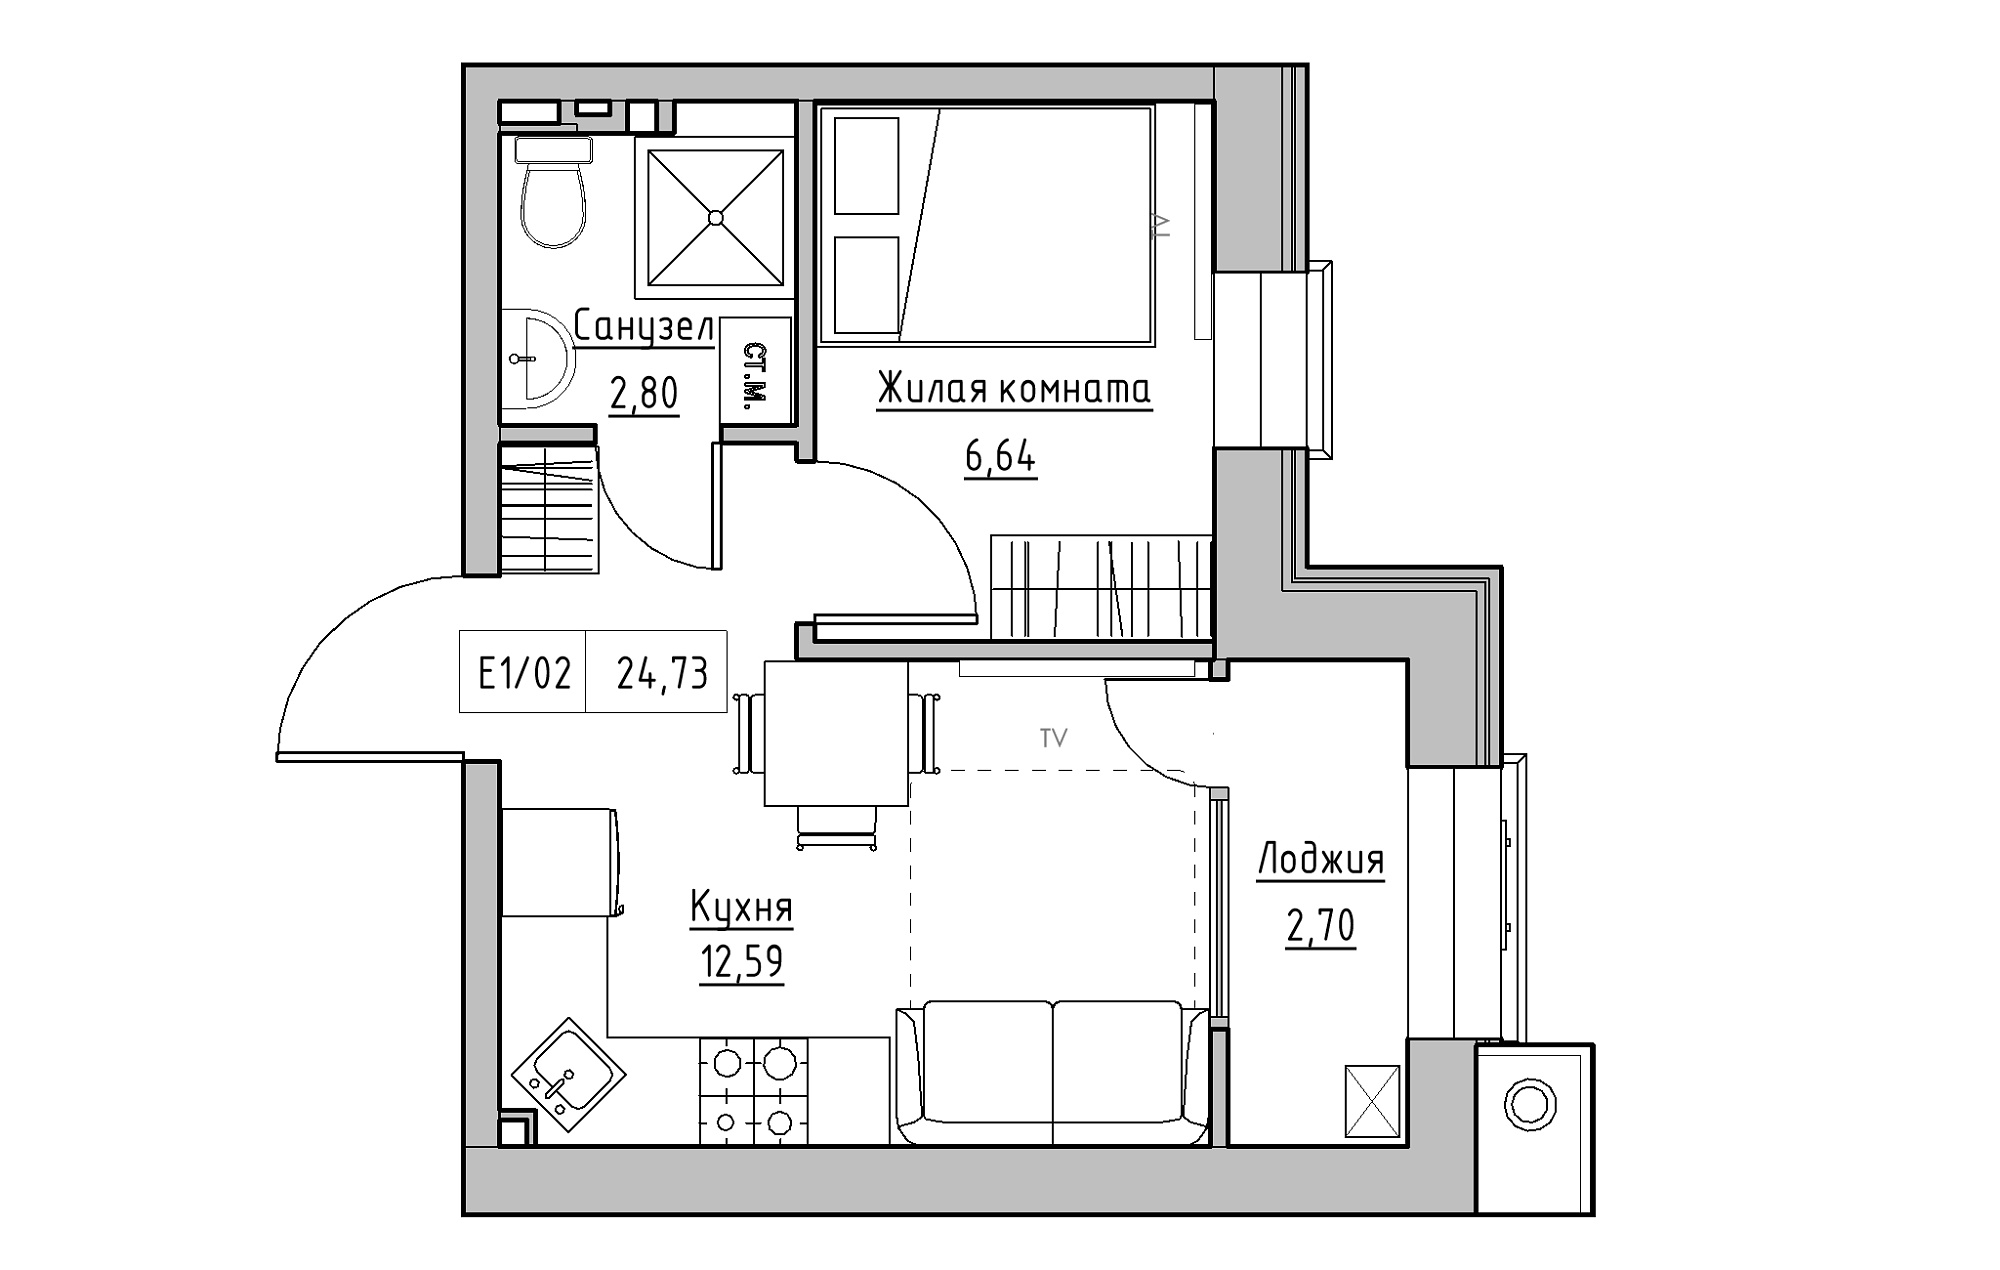 Planning 1-rm flats area 24.73m2, KS-013-01/0001.